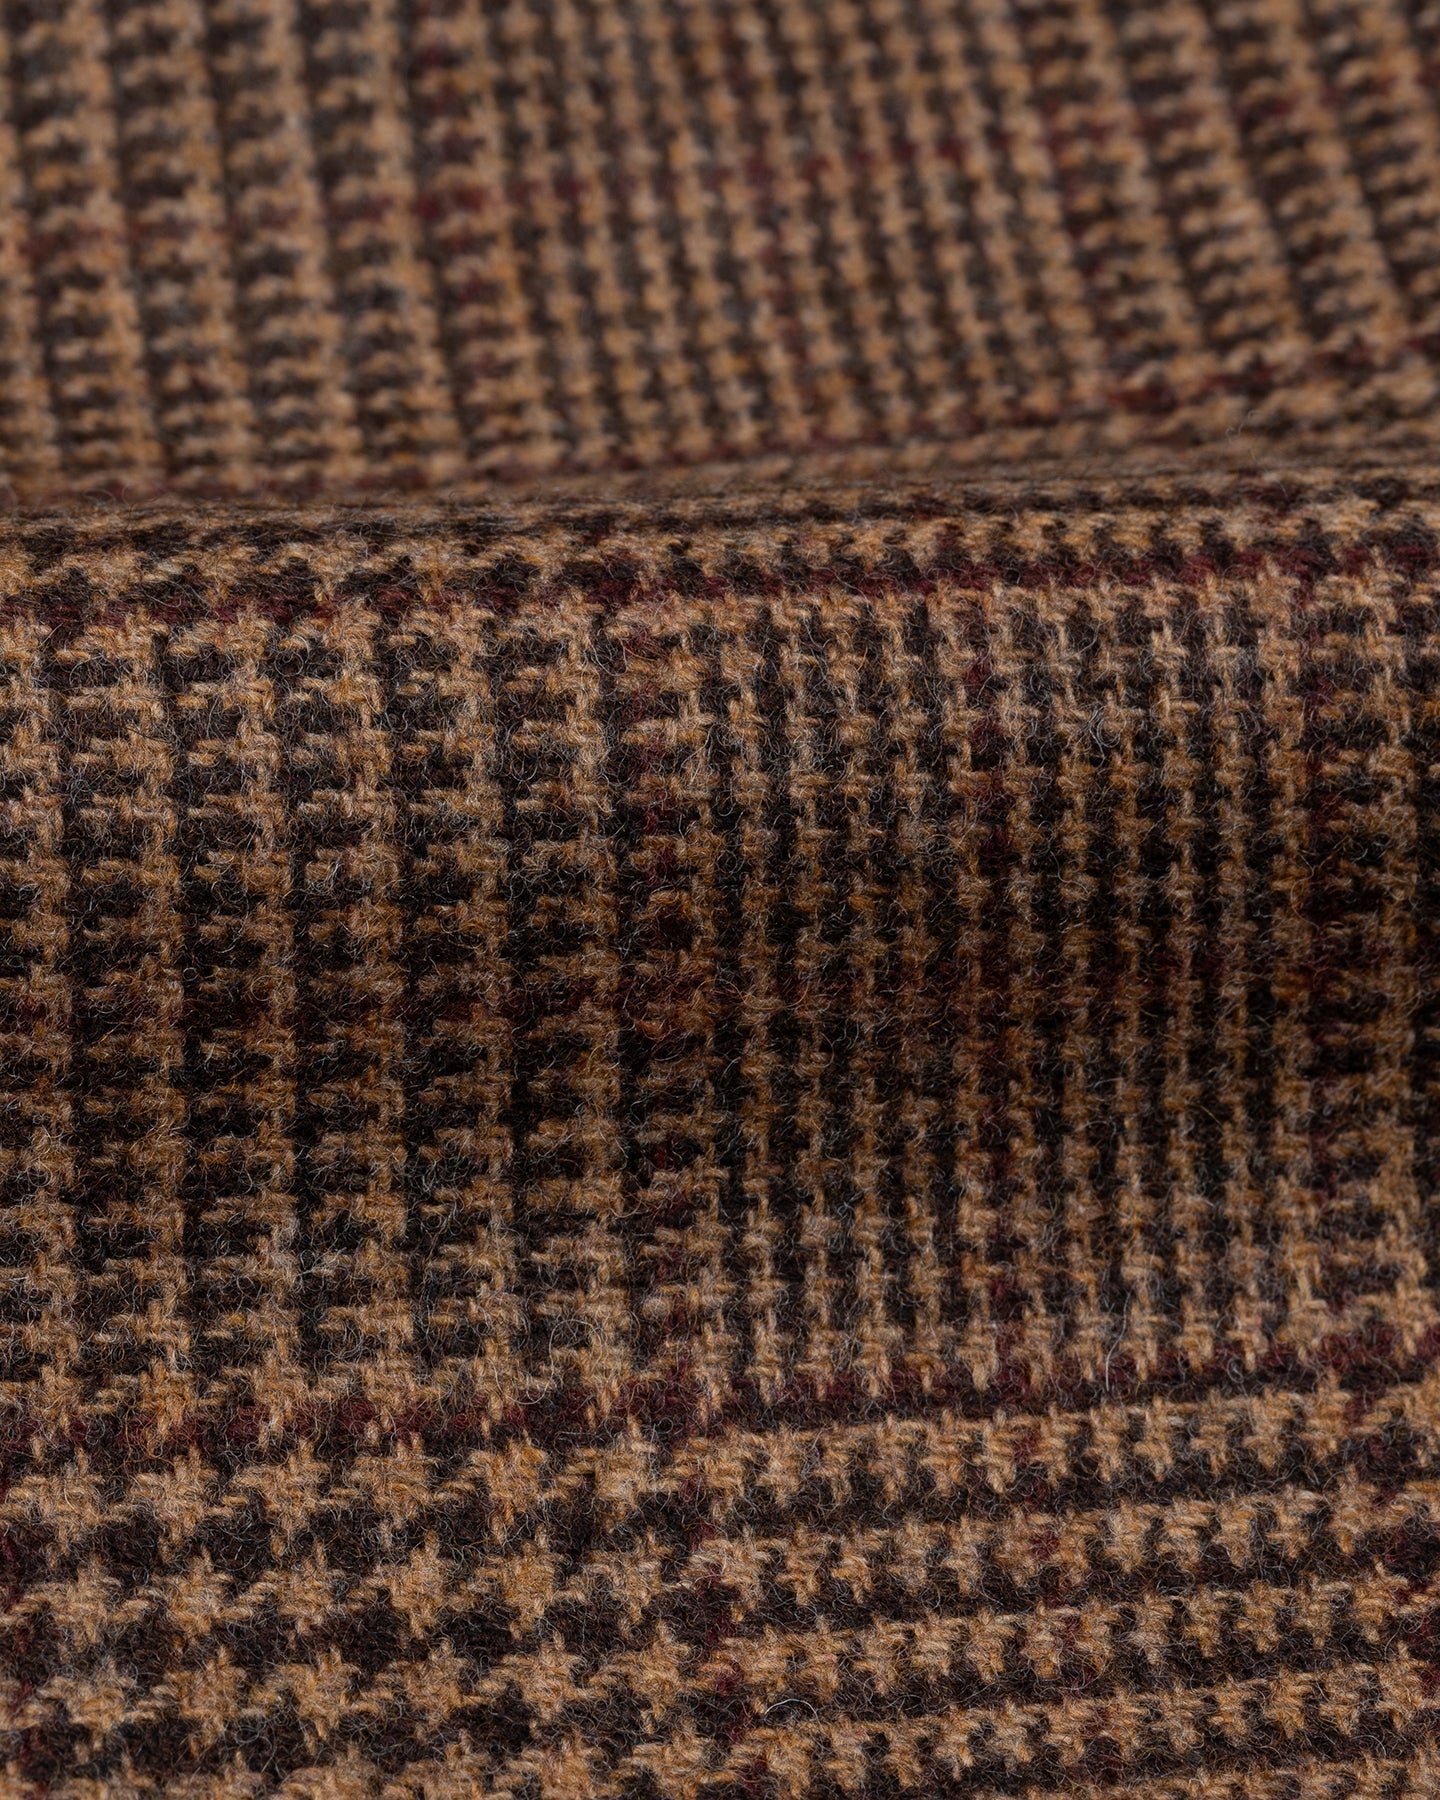 Made-To-Order Sport Coat Brown Prince of Wales Merino Wool